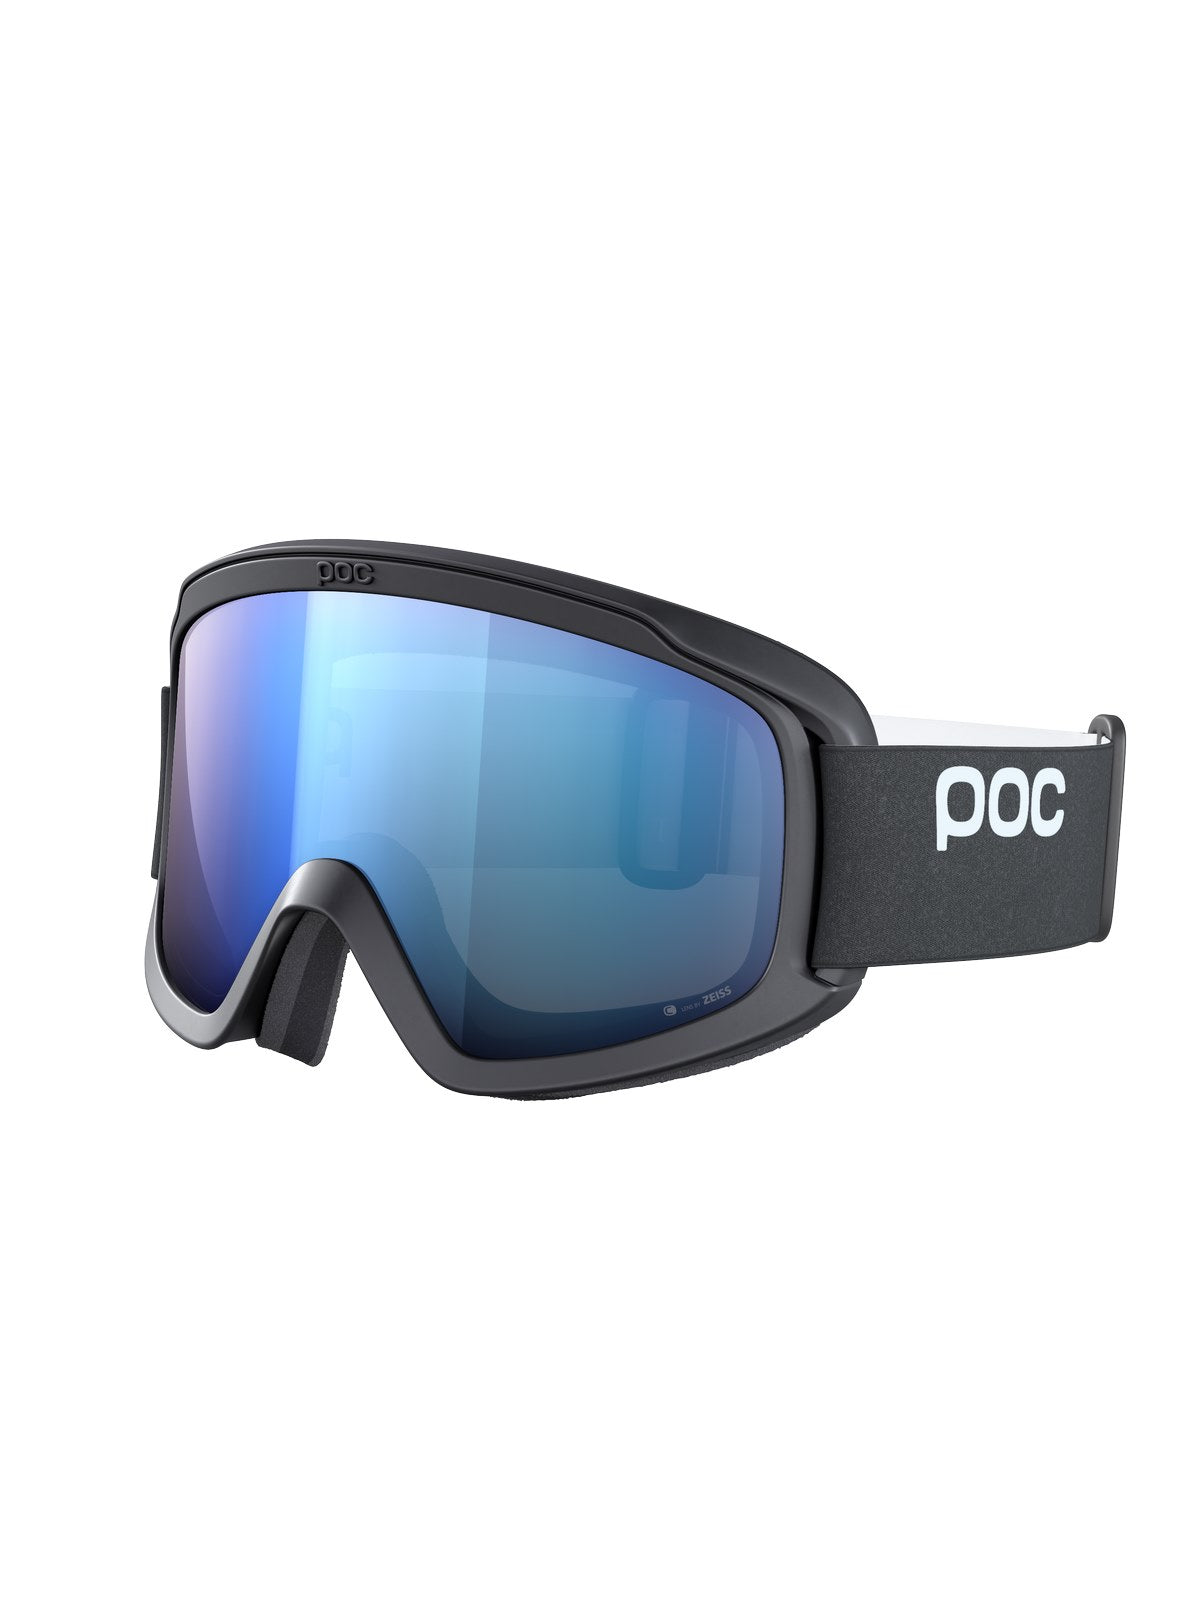 Gogle narciarskie POC Opsin - Ur. Black|Pt. Sunny Blue Cat 2